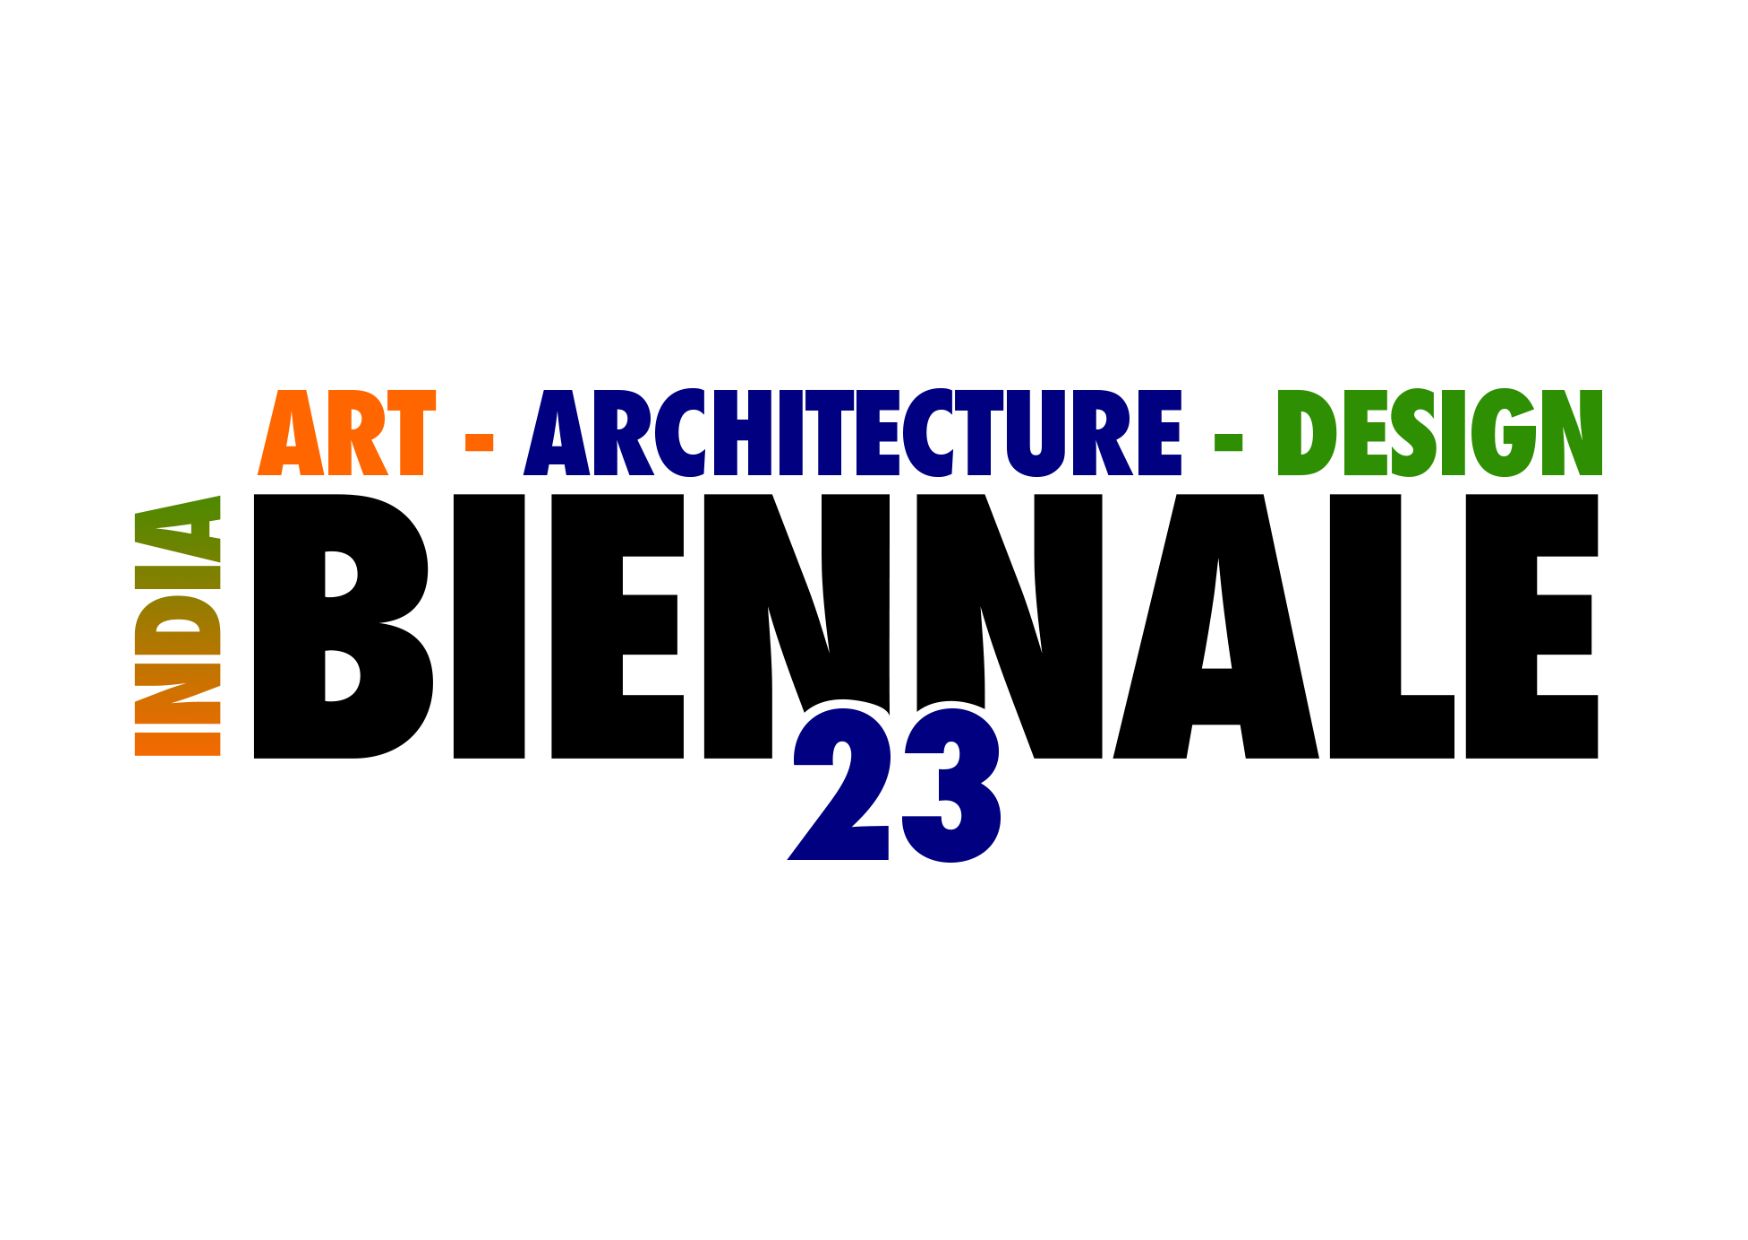 Indian, Art, Architecture and Design Biennale (IAADB) 2023